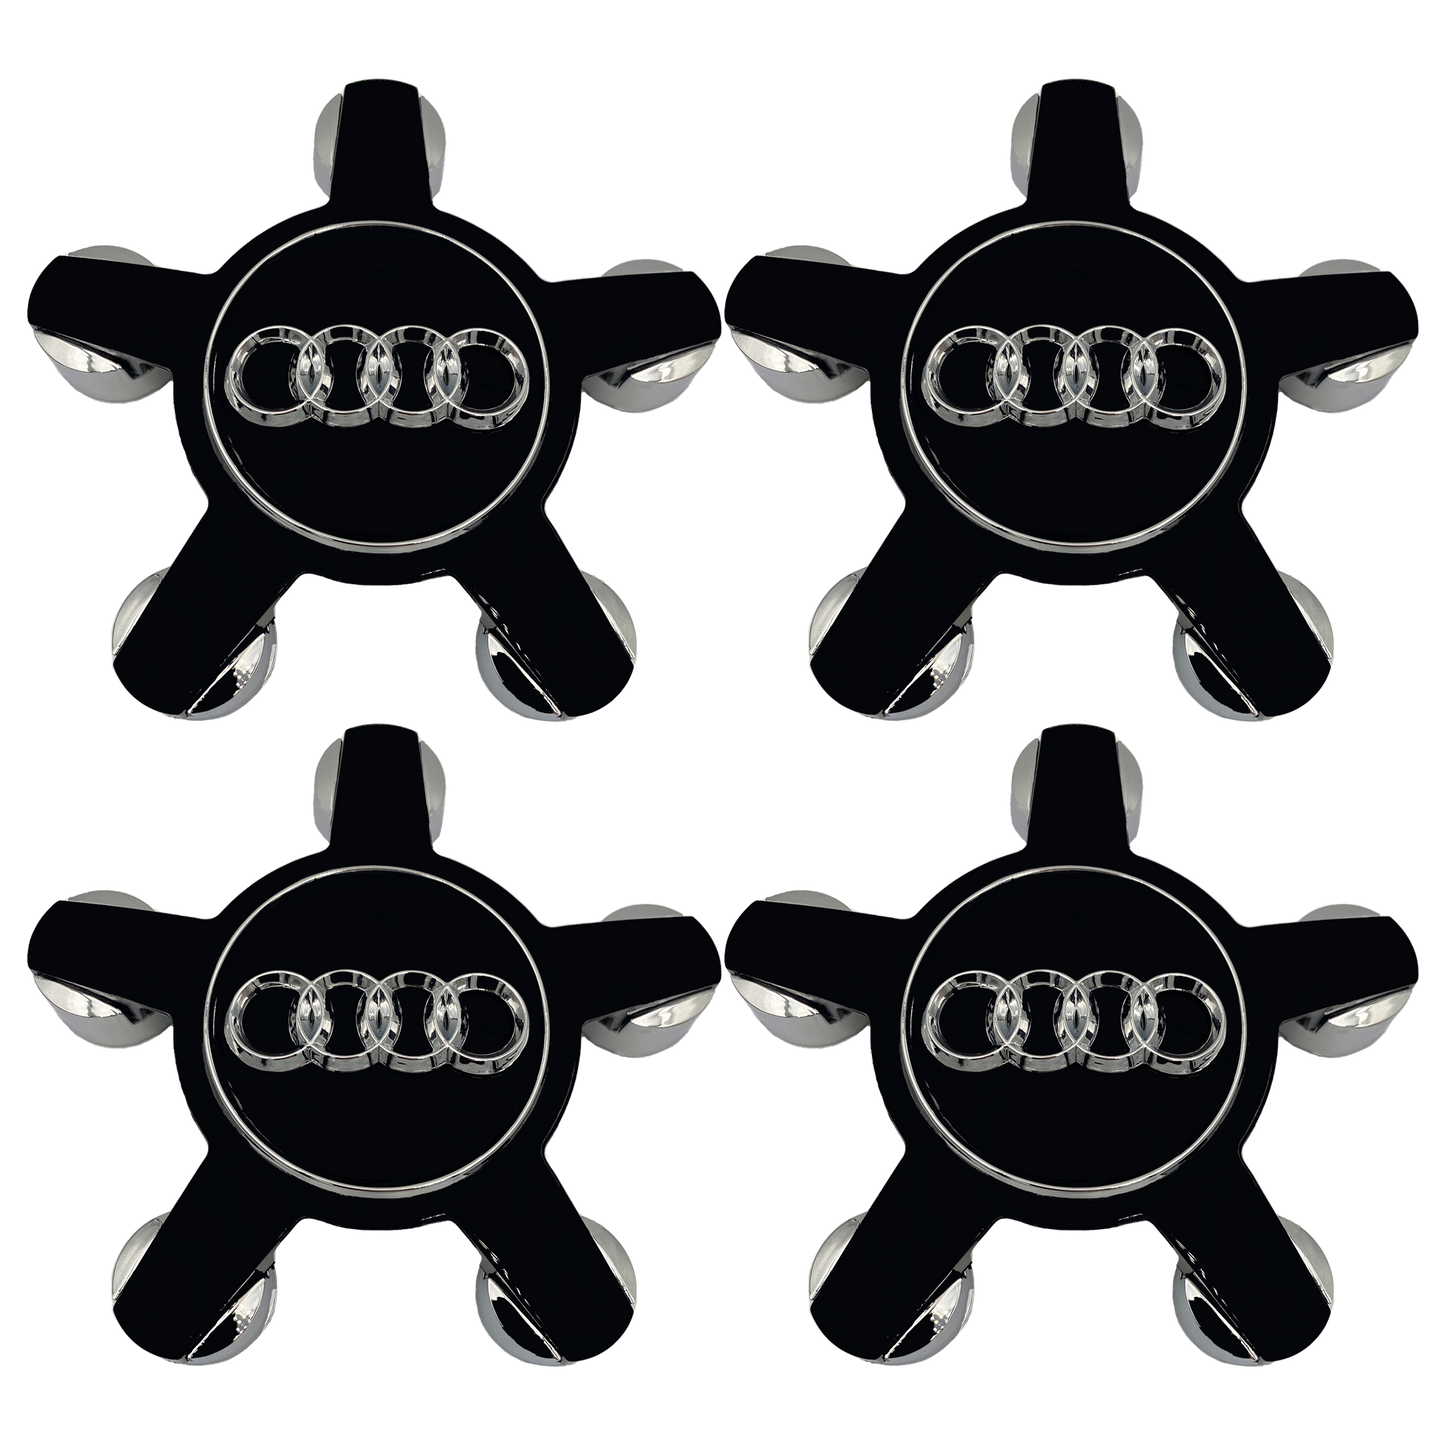 4 pieces. Audi Center caps Black 135mm